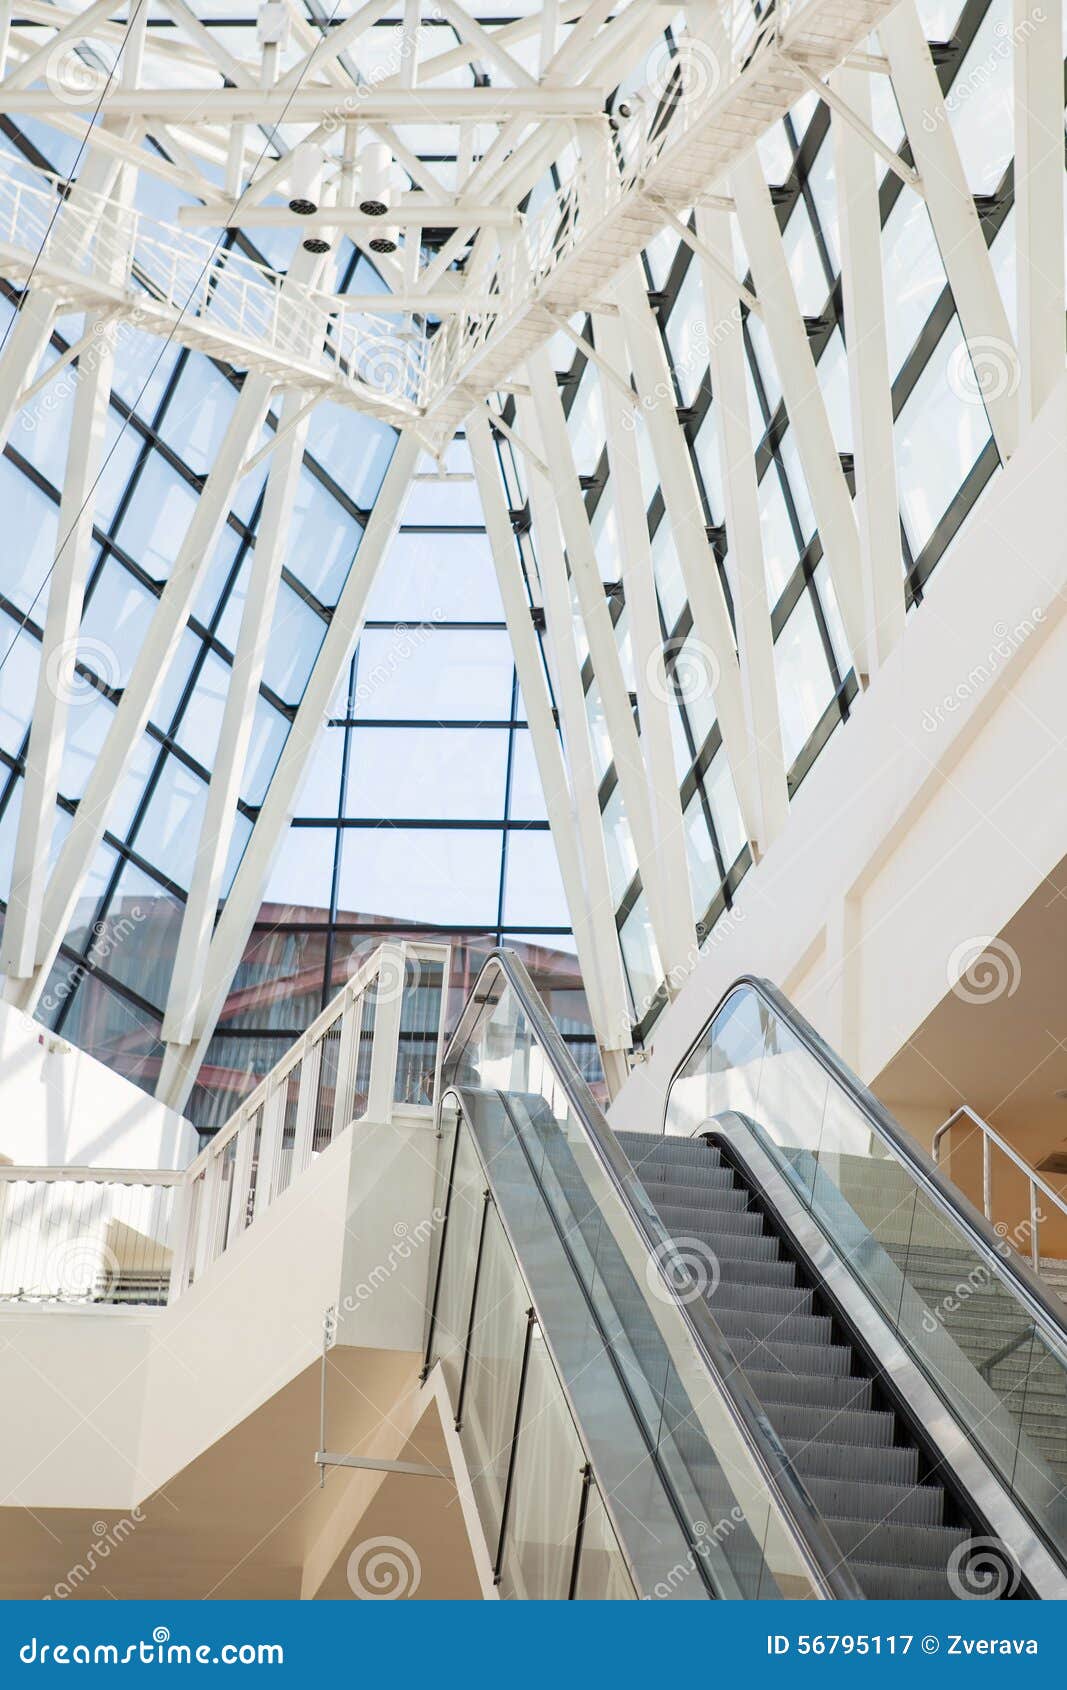 Escalator And Glass Roof In Futuristic Hi Tech Stock Image